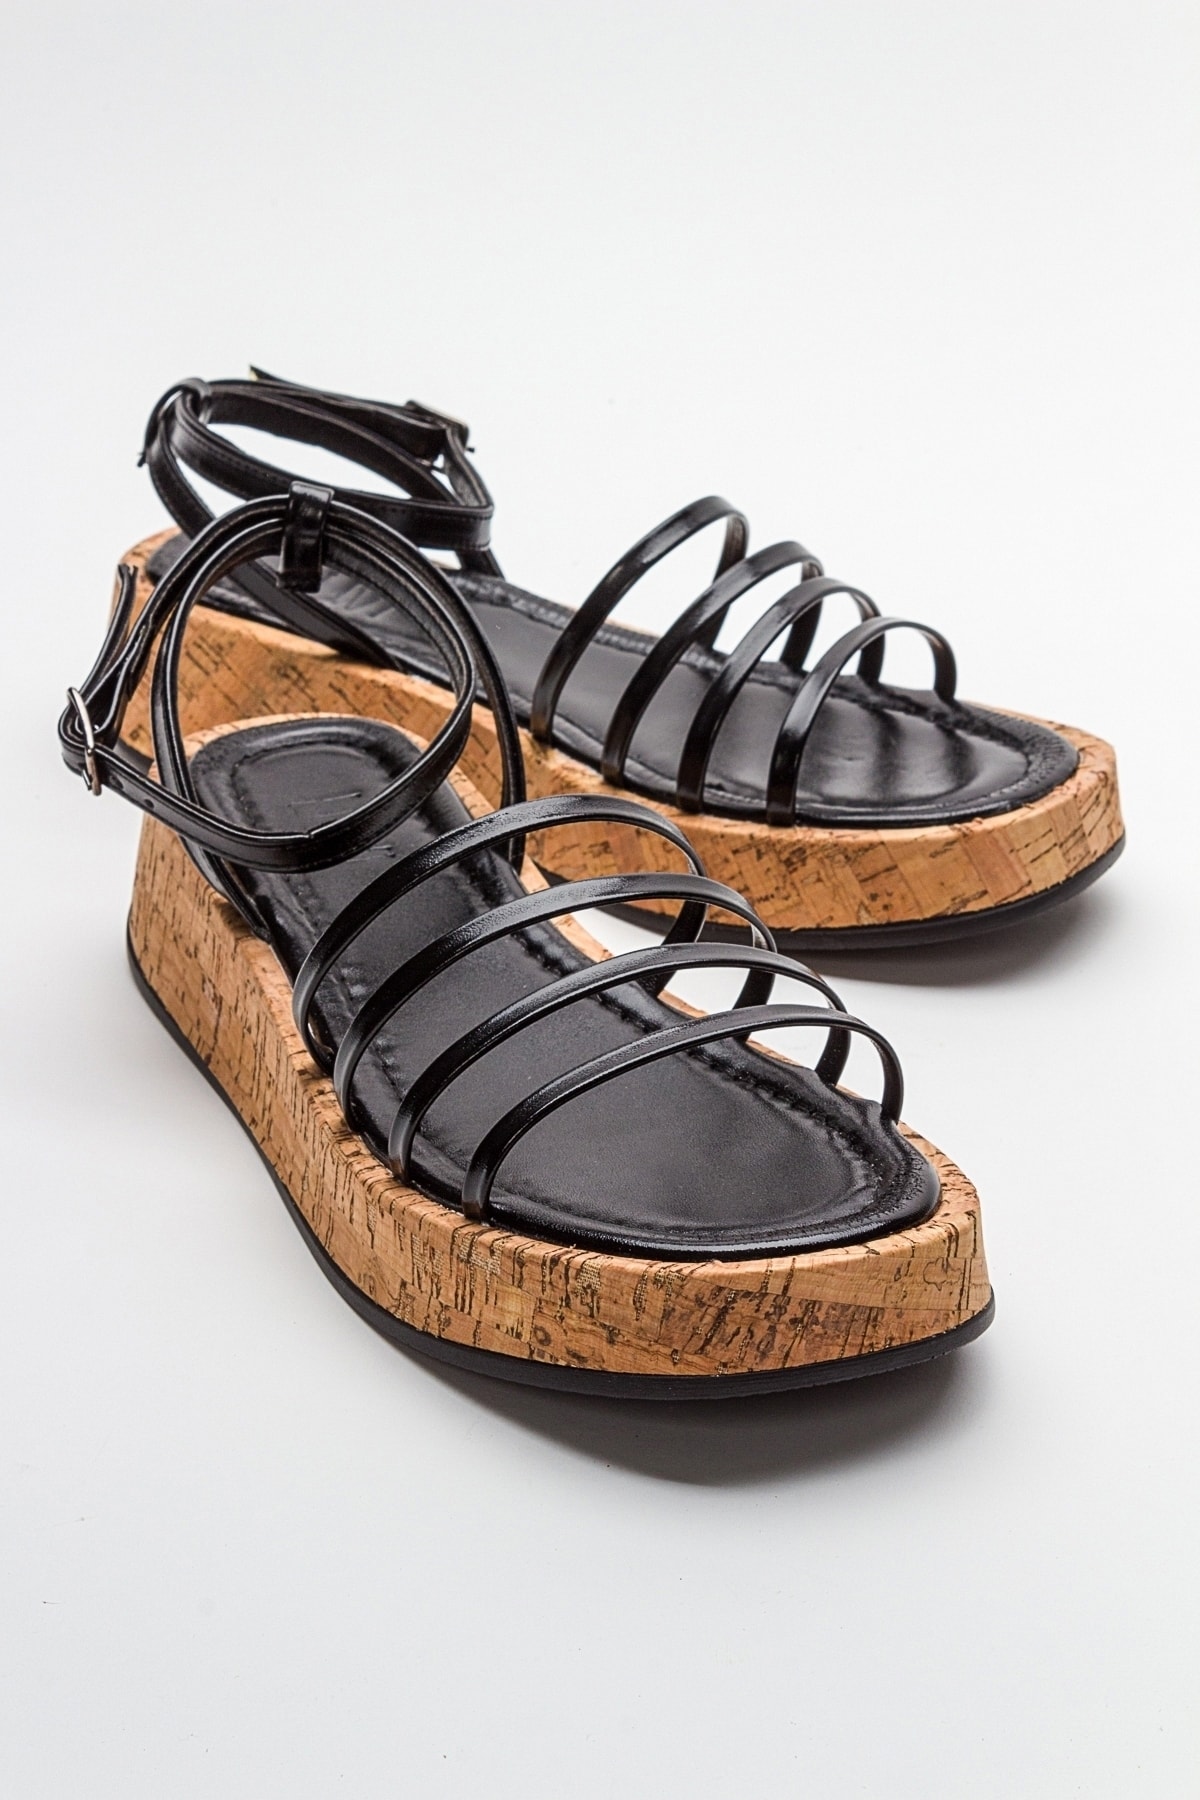 LuviShoes ANGELA Women's Metallic Black Sandals